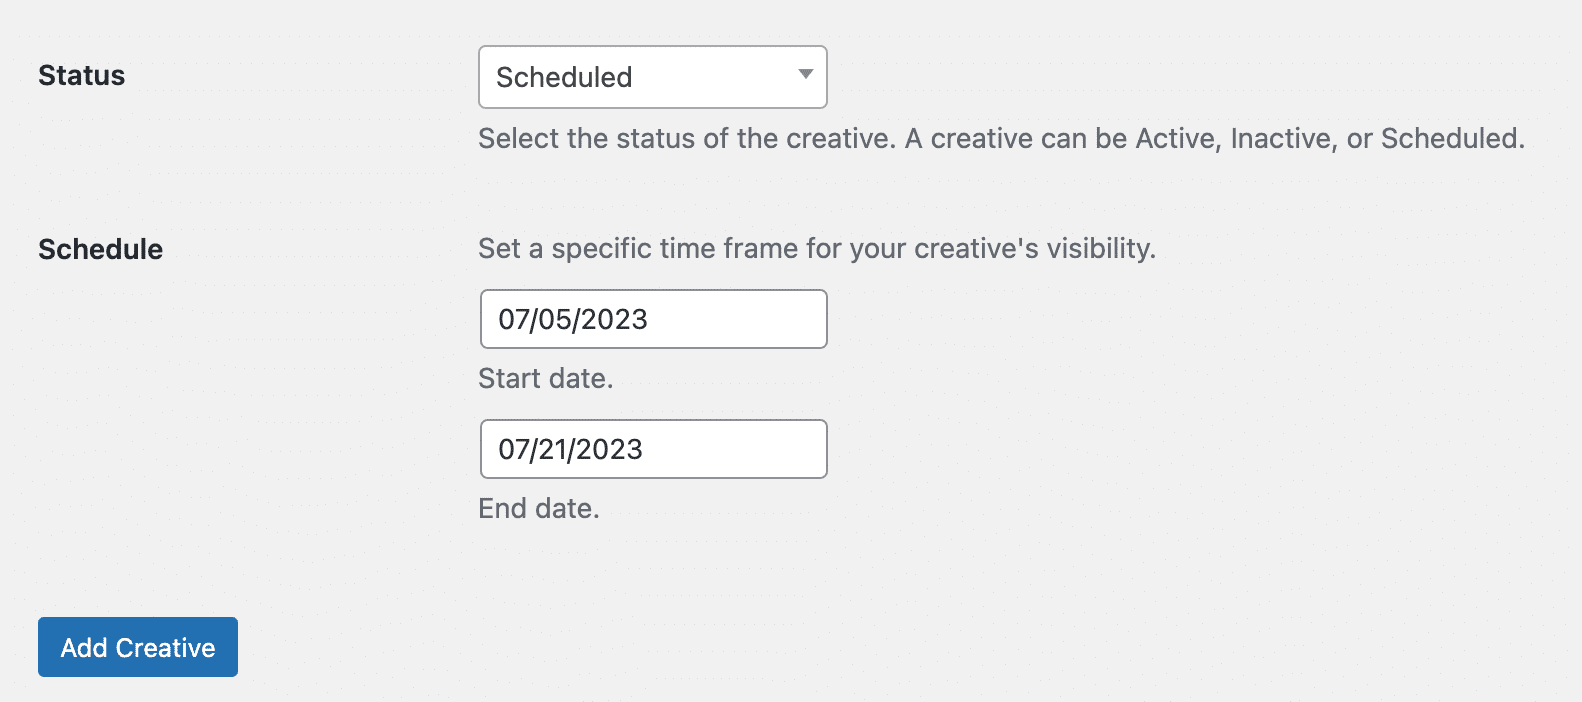 Scheduling a new creative